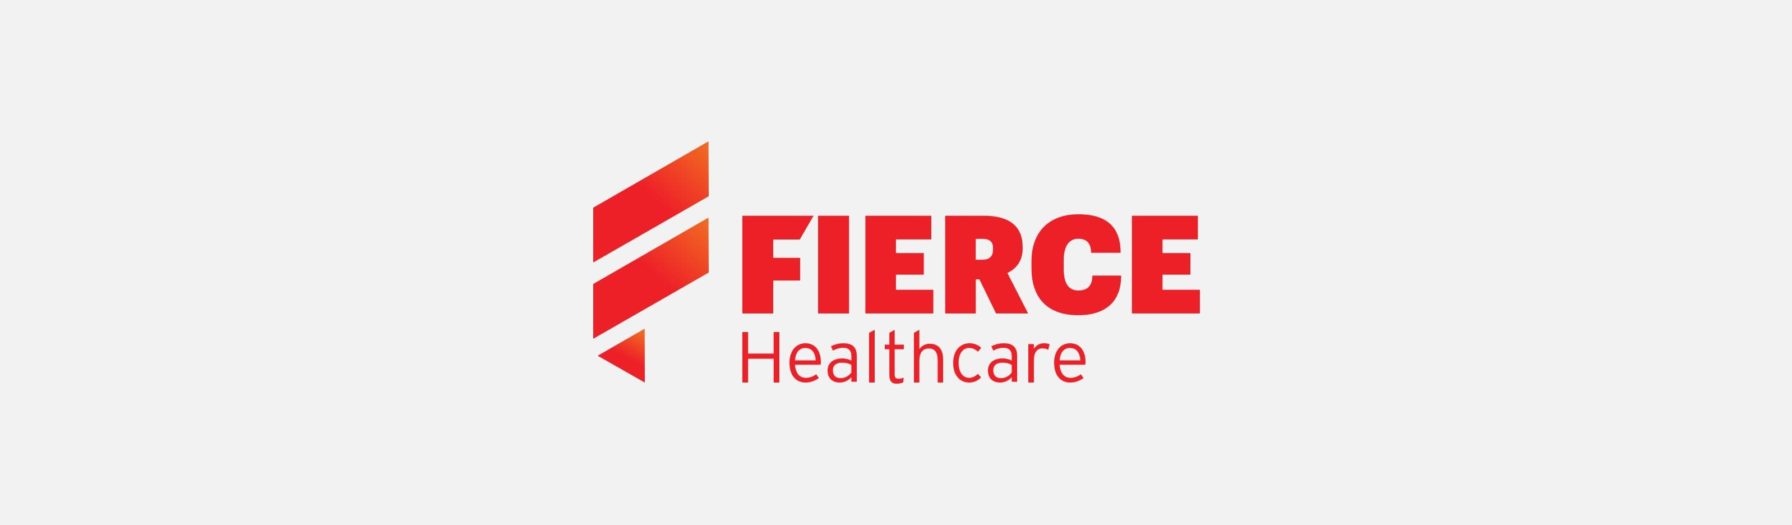  FierceHealthcare logo